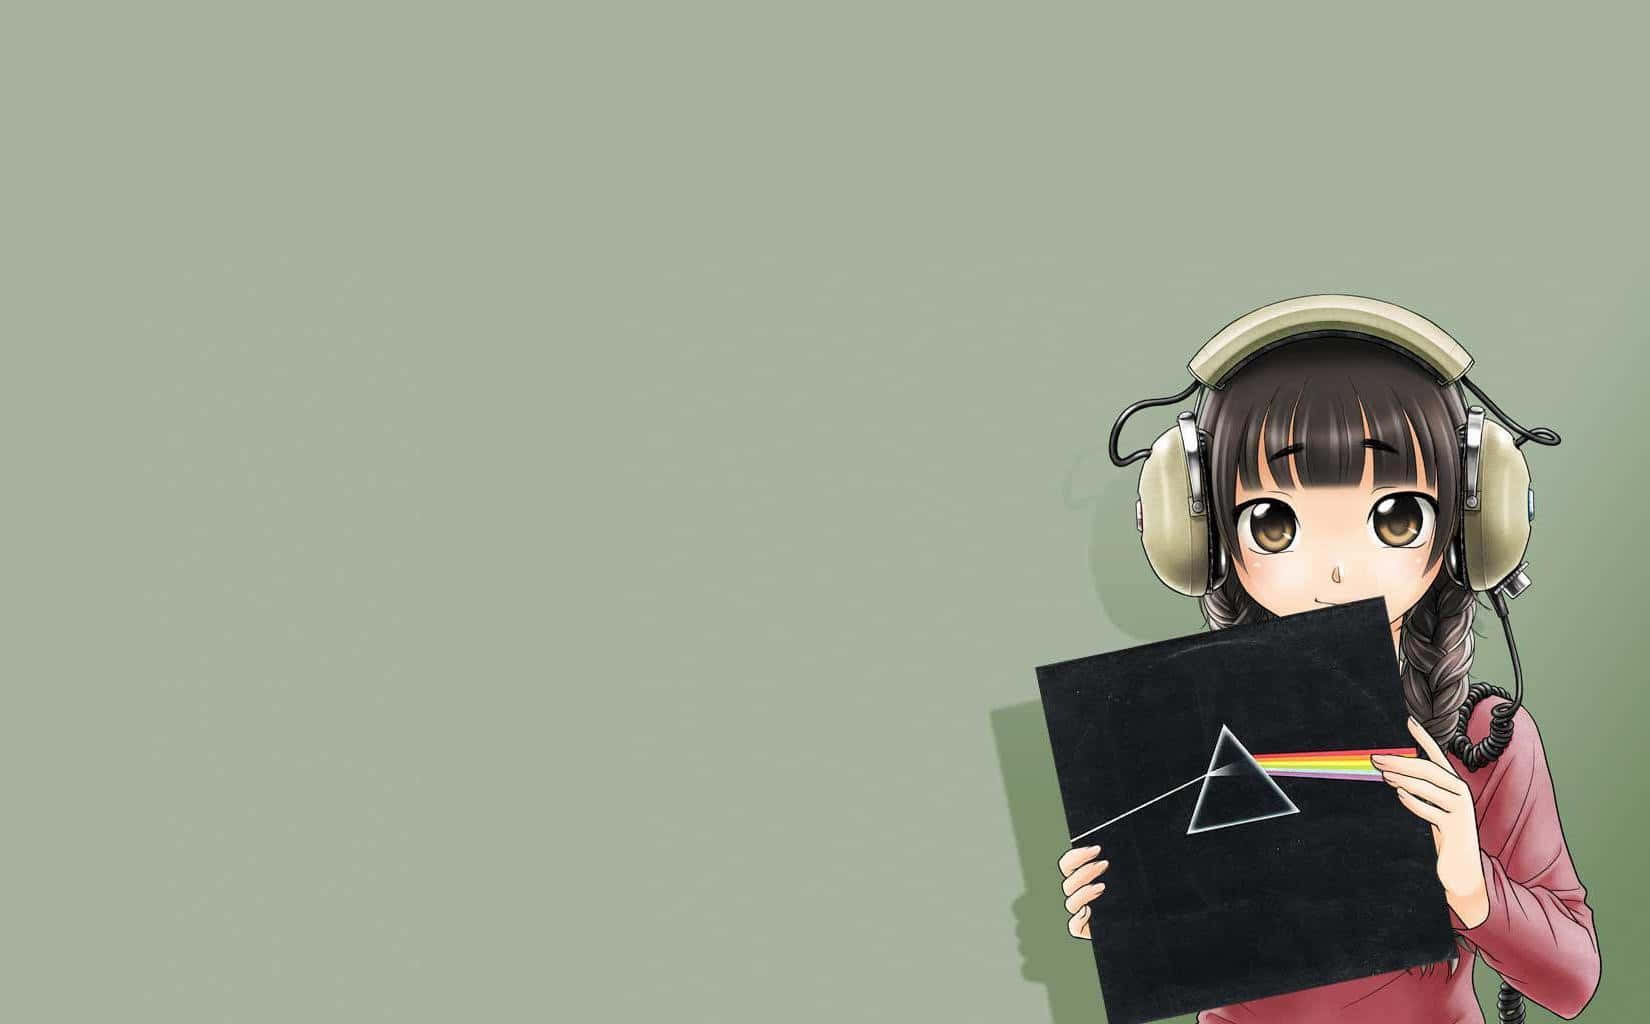 Music Anime Girl With Headphone Wallpaper